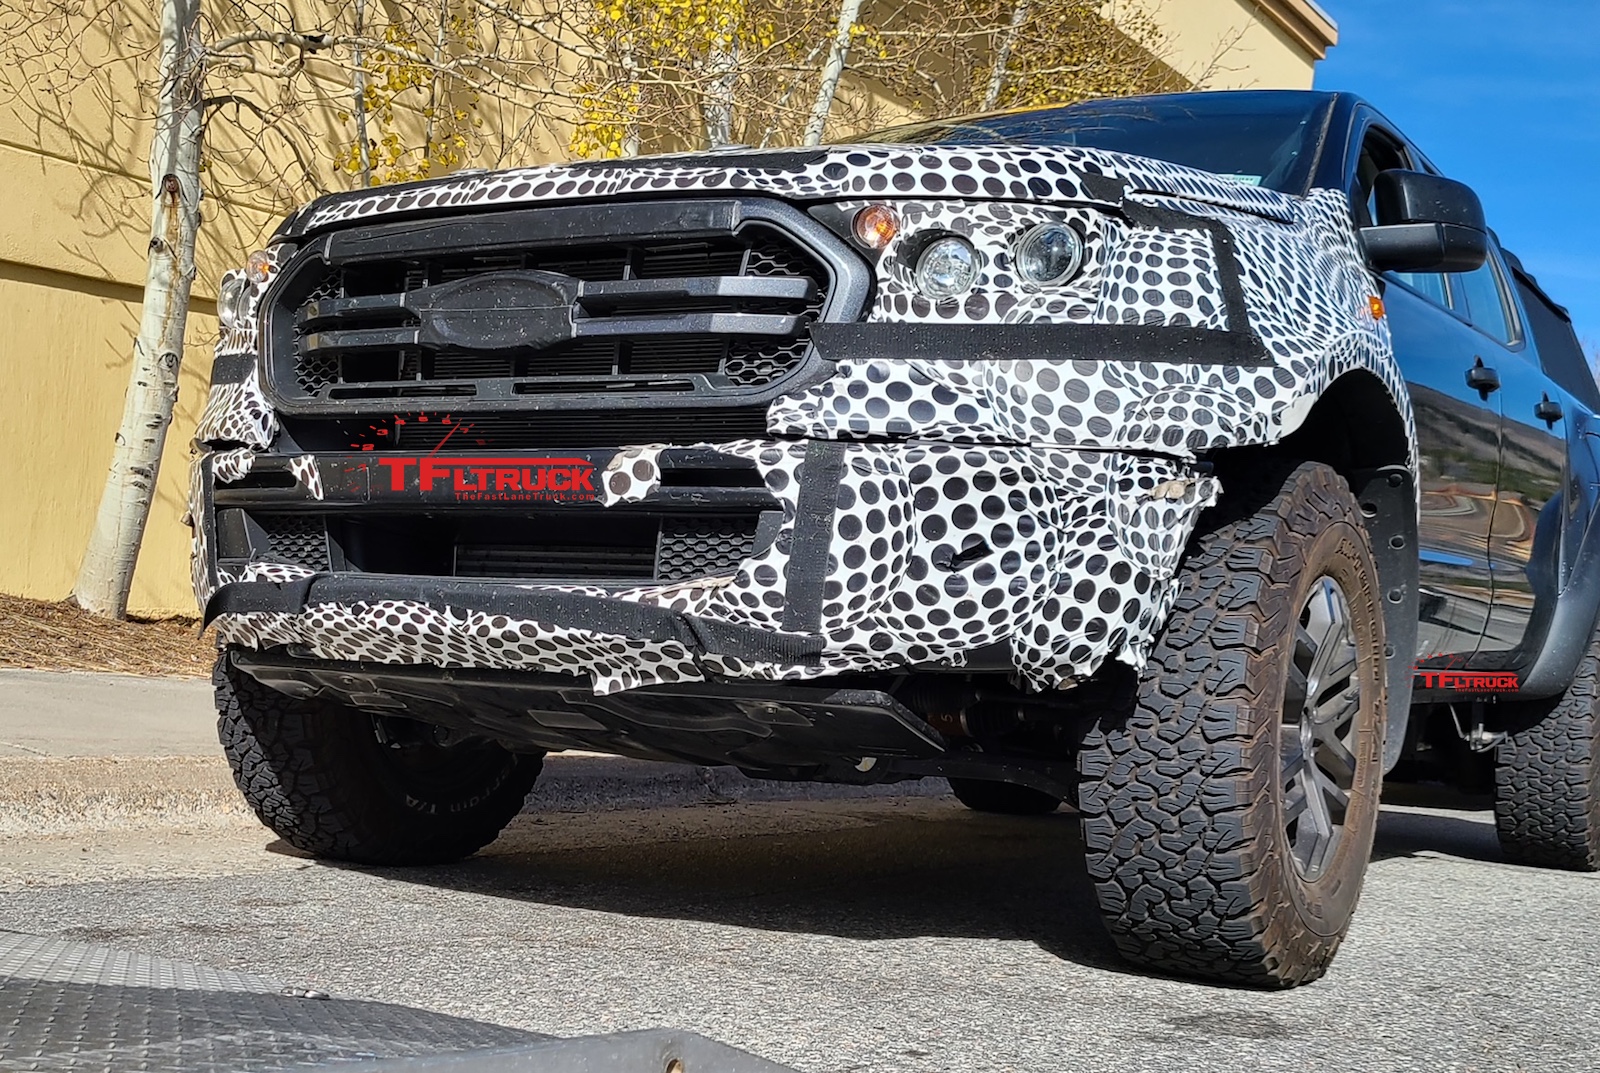 Spied: Look Underneath This 12 Ford Ranger Raptor Prototype